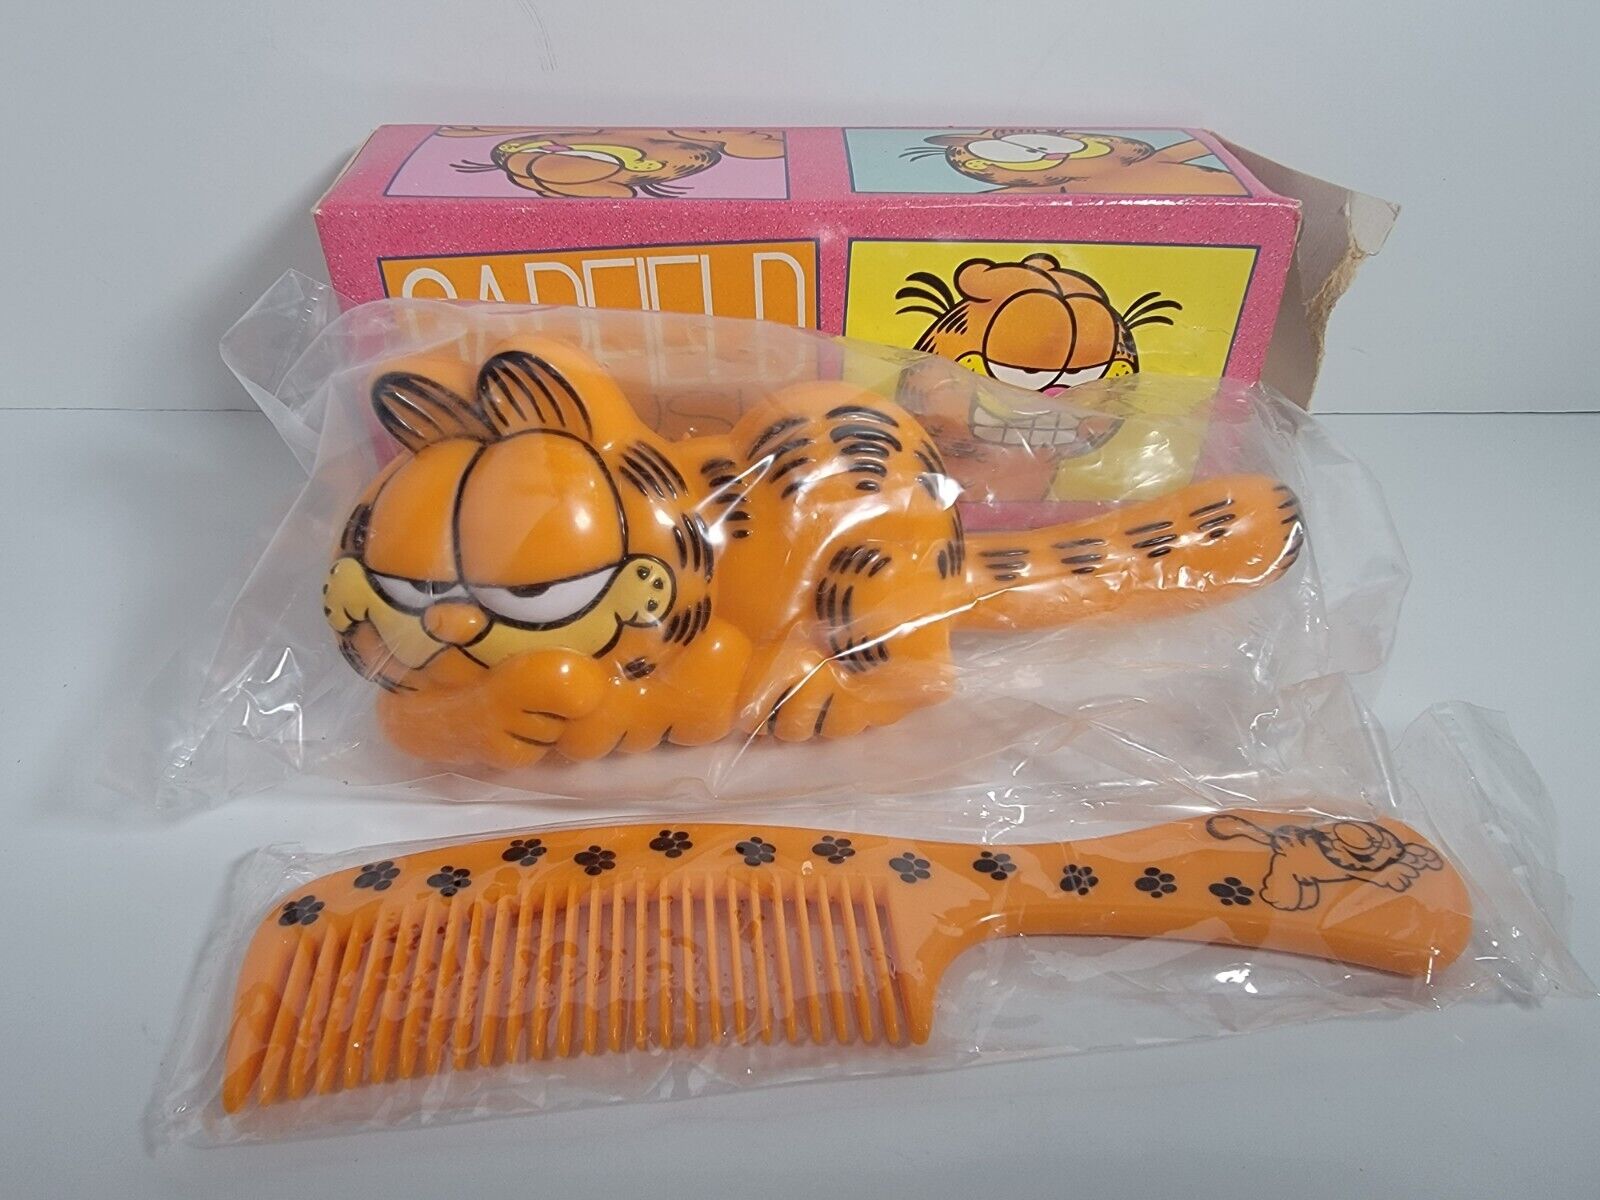 1978 Garfield Brush And Comb Set -Avon- New In Orig Packaging,